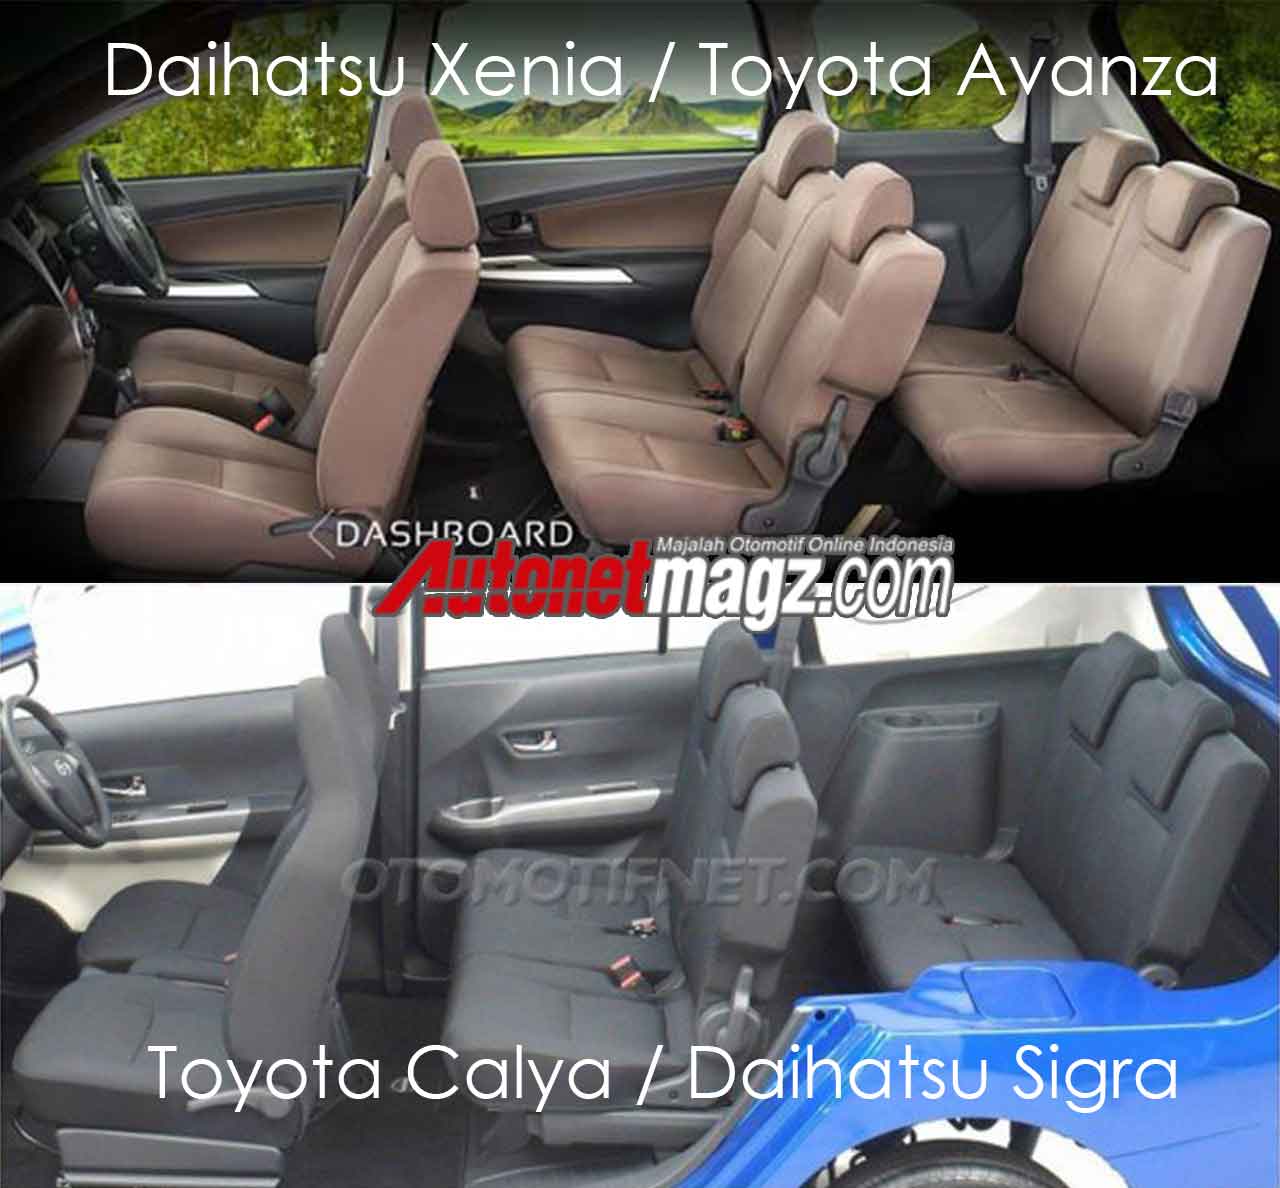 Daihatsu, kelegaan-kabin-avanza-vs-calya: Spesifikasi Toyota Calya Sadis, Berpotensi Membunuh Datsun Hingga Avanza!